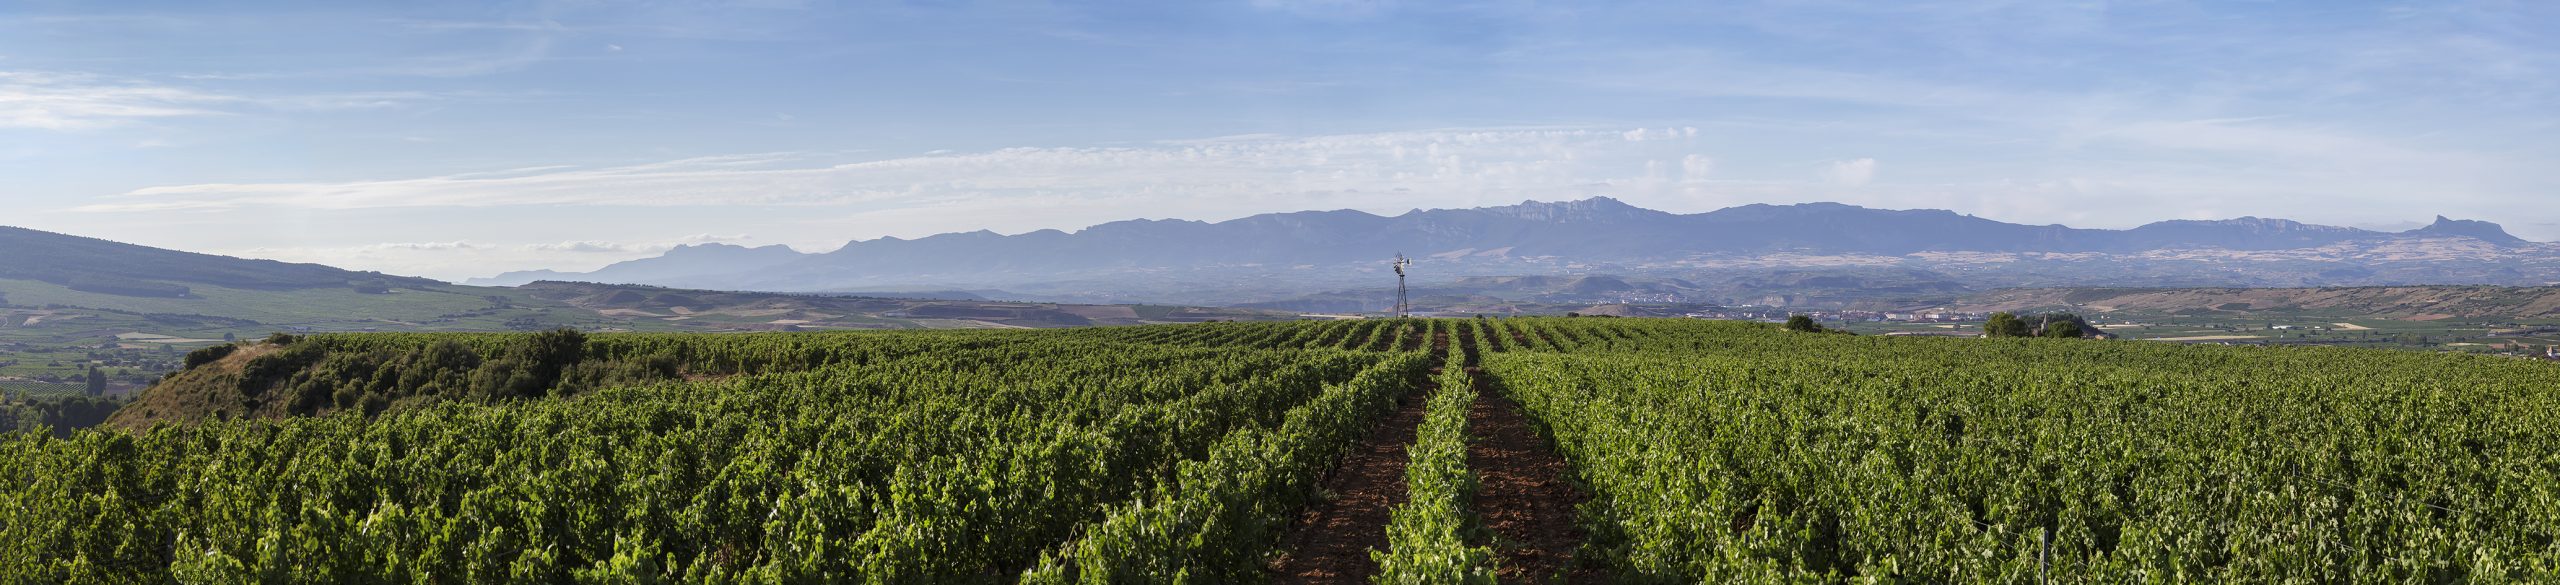 Bodegas Corral · Don Jacobo | Vinos de Rioja y Enoexperiencias|Los Corrales de Moncalvillo